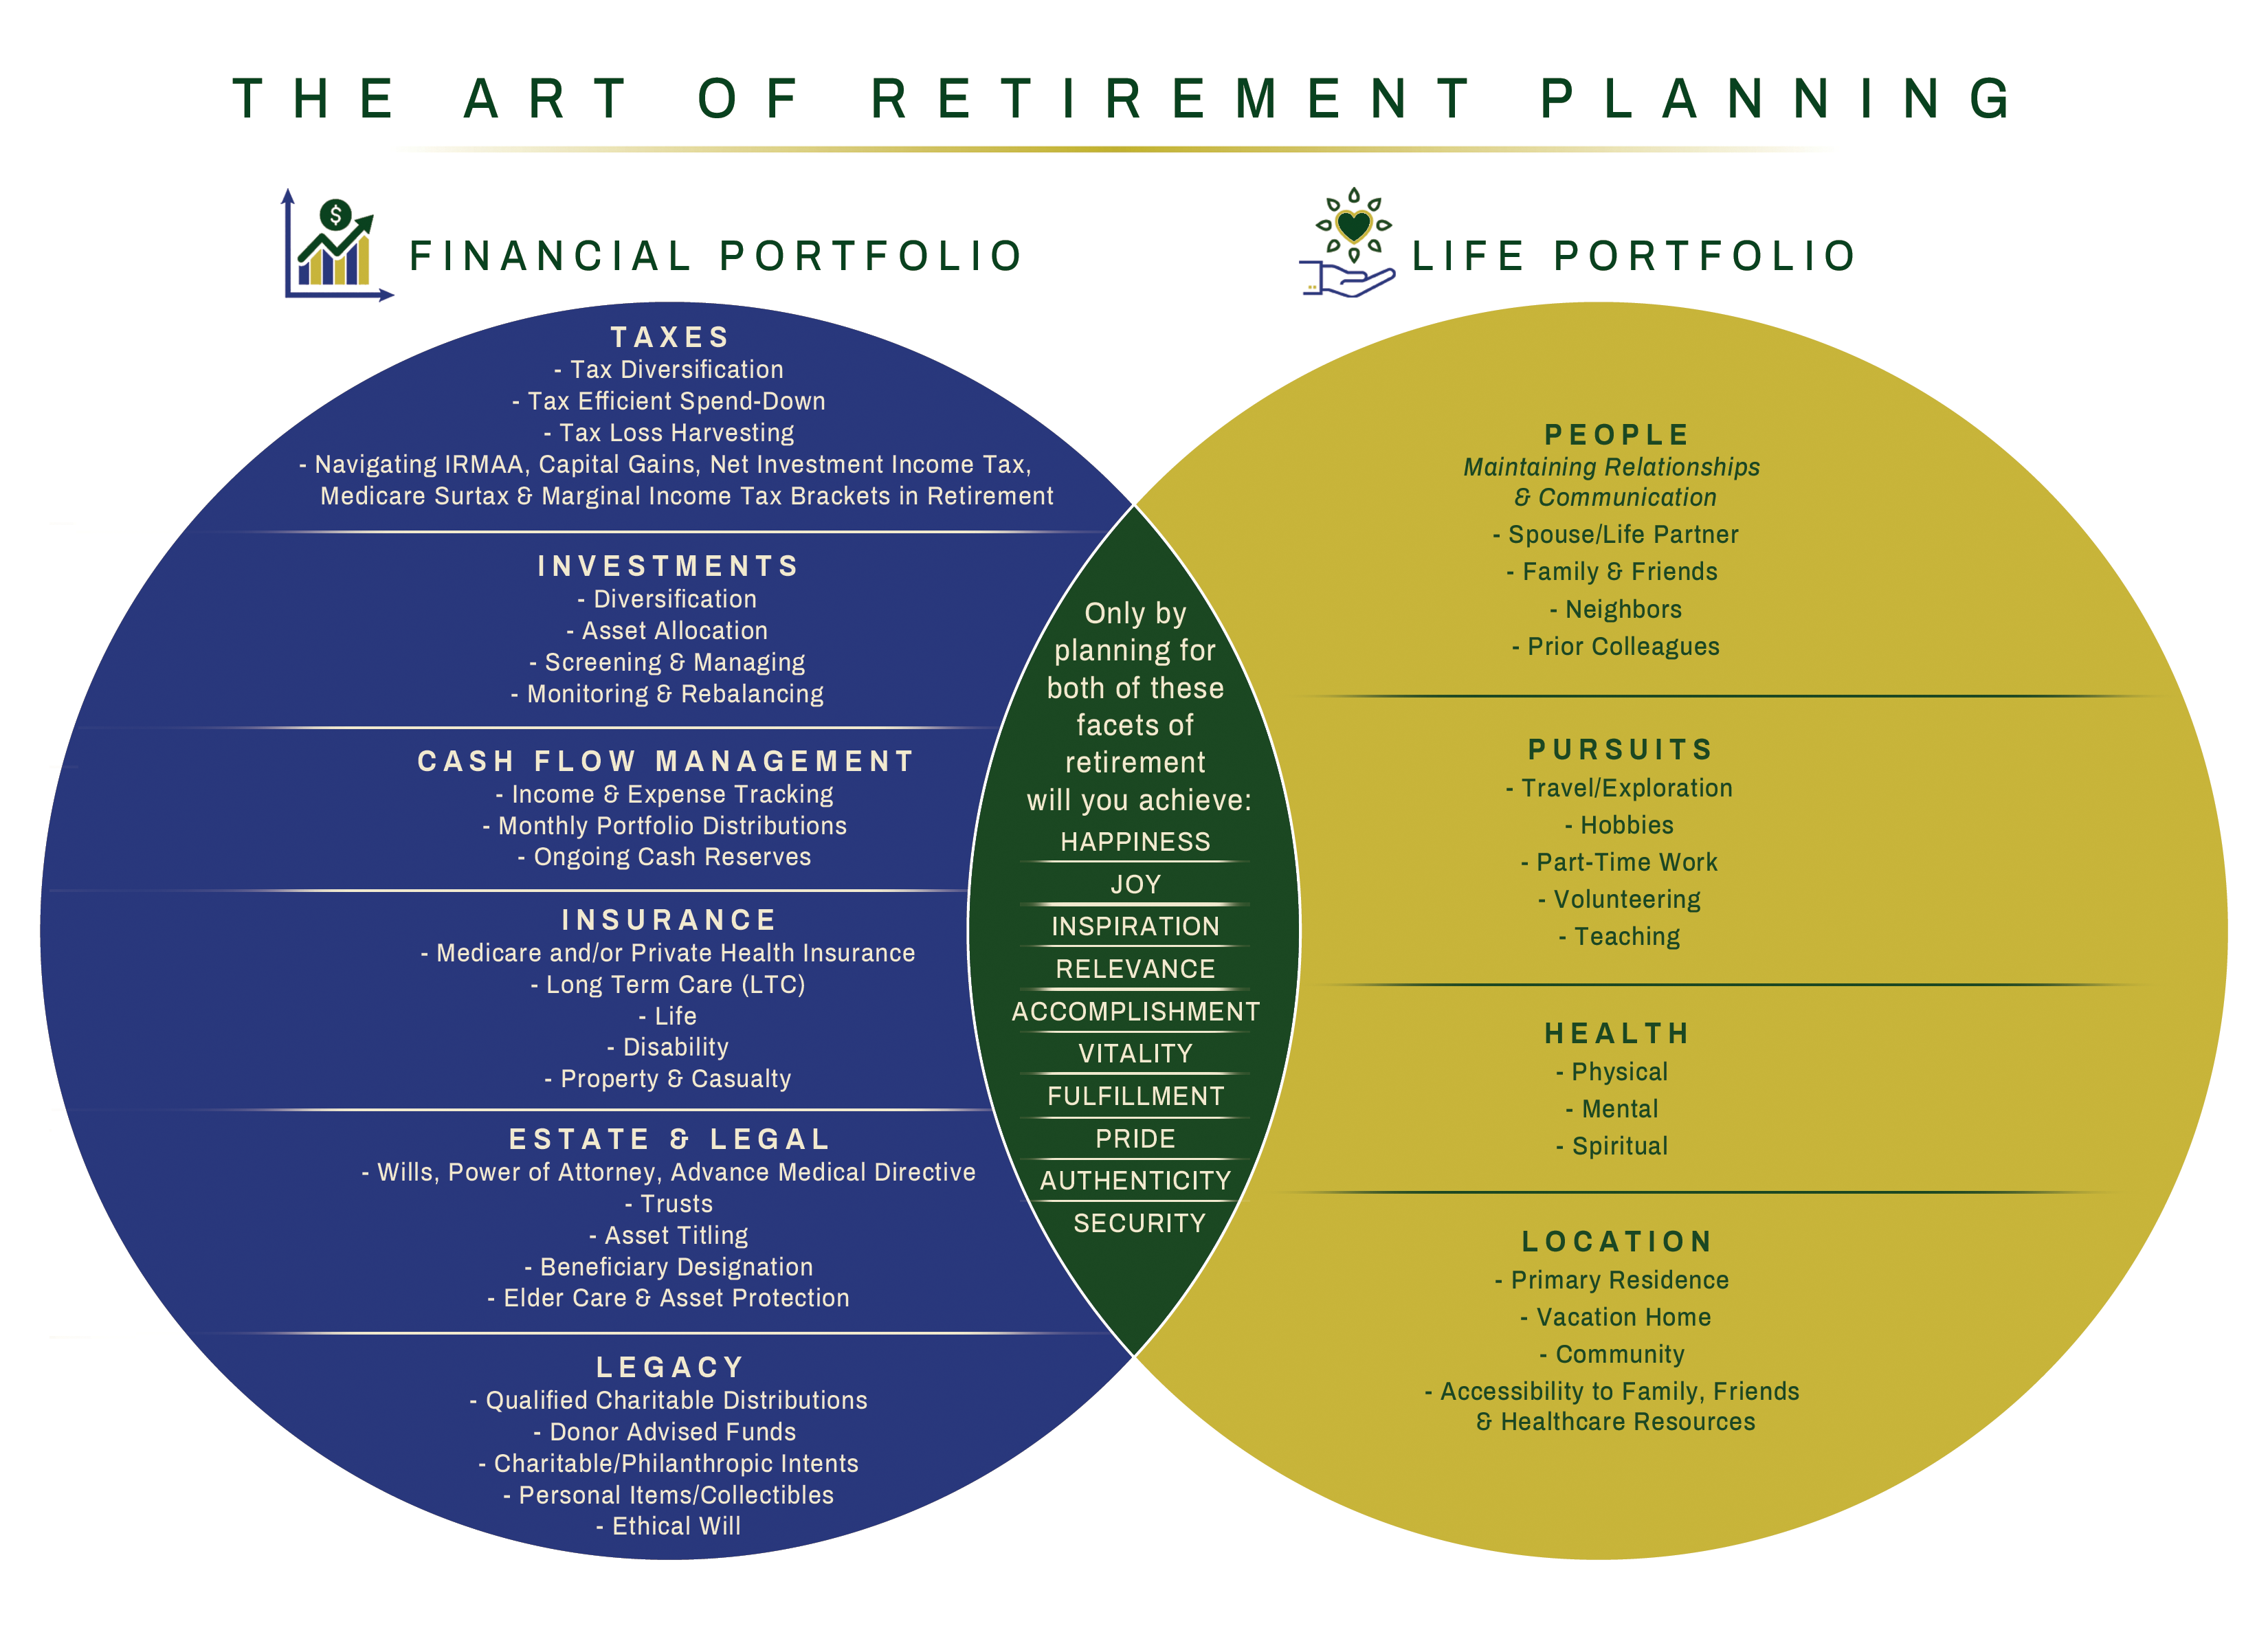 The Art of Retirement Planning 